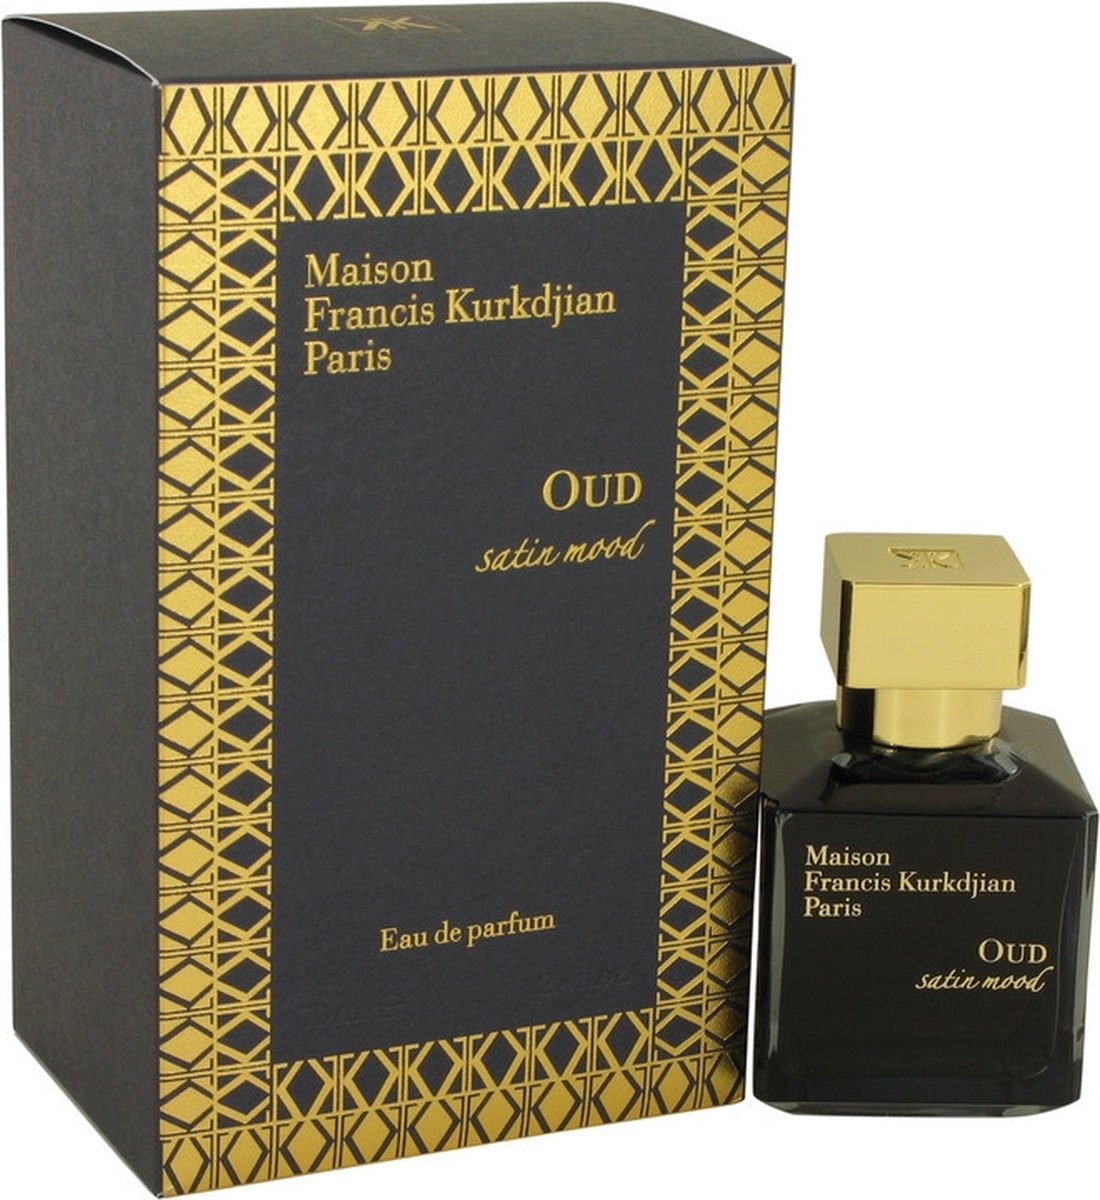 Oud Satin Mood by Maison Francis Kurkdjian 71 ml - Eau De Parfum Spray (Unisex)